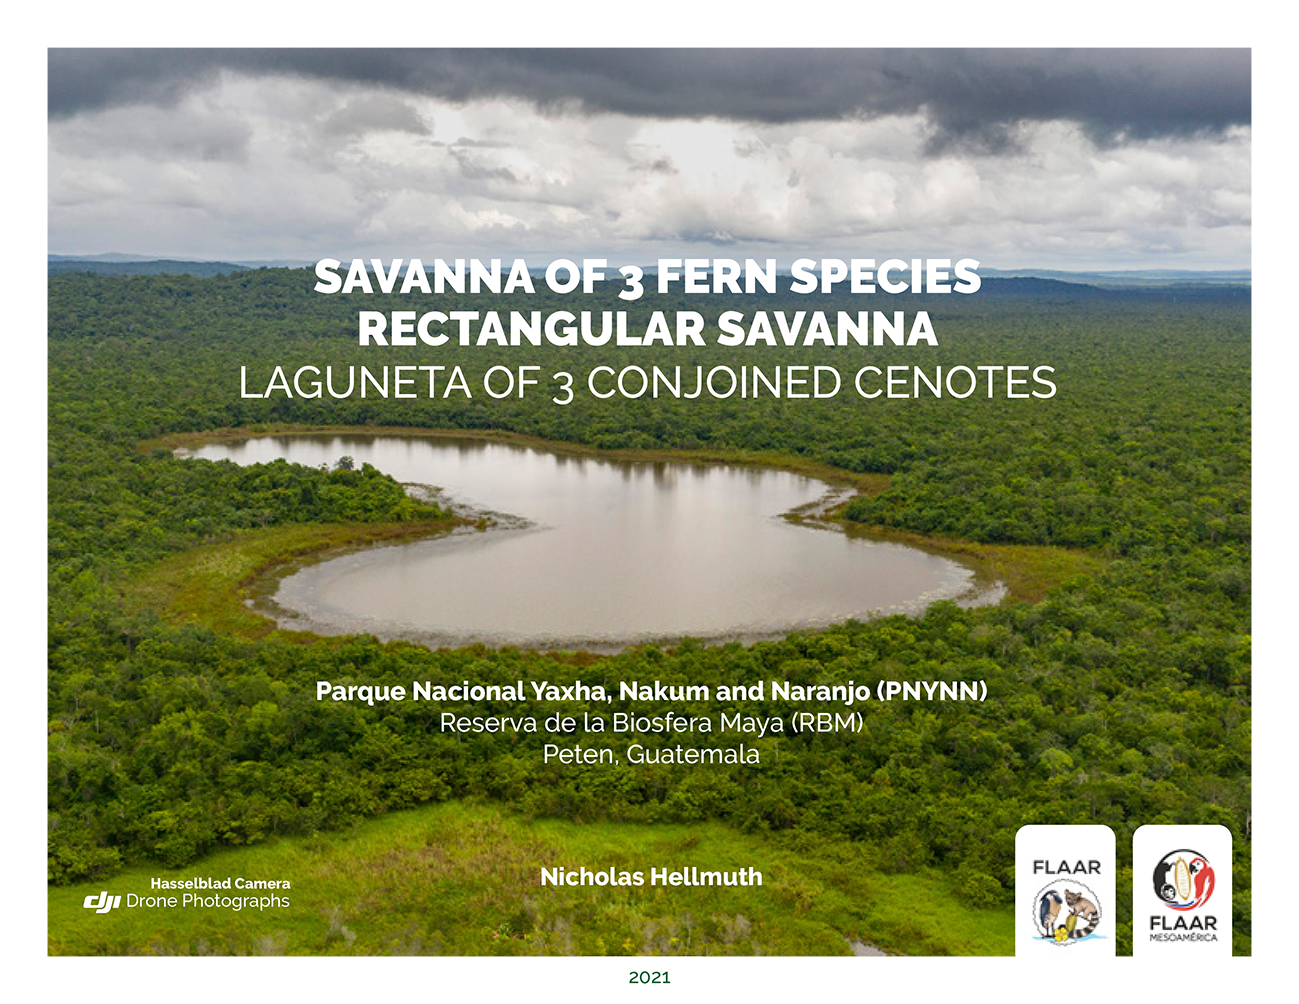 Savanna-3-Fern-species-Laguneta-3-Conjoined-Cenotes-PNYNN-RBM-Haniel-Lopez-drone-photos-horizontal-Hellmuth-text-FLAAR-reports